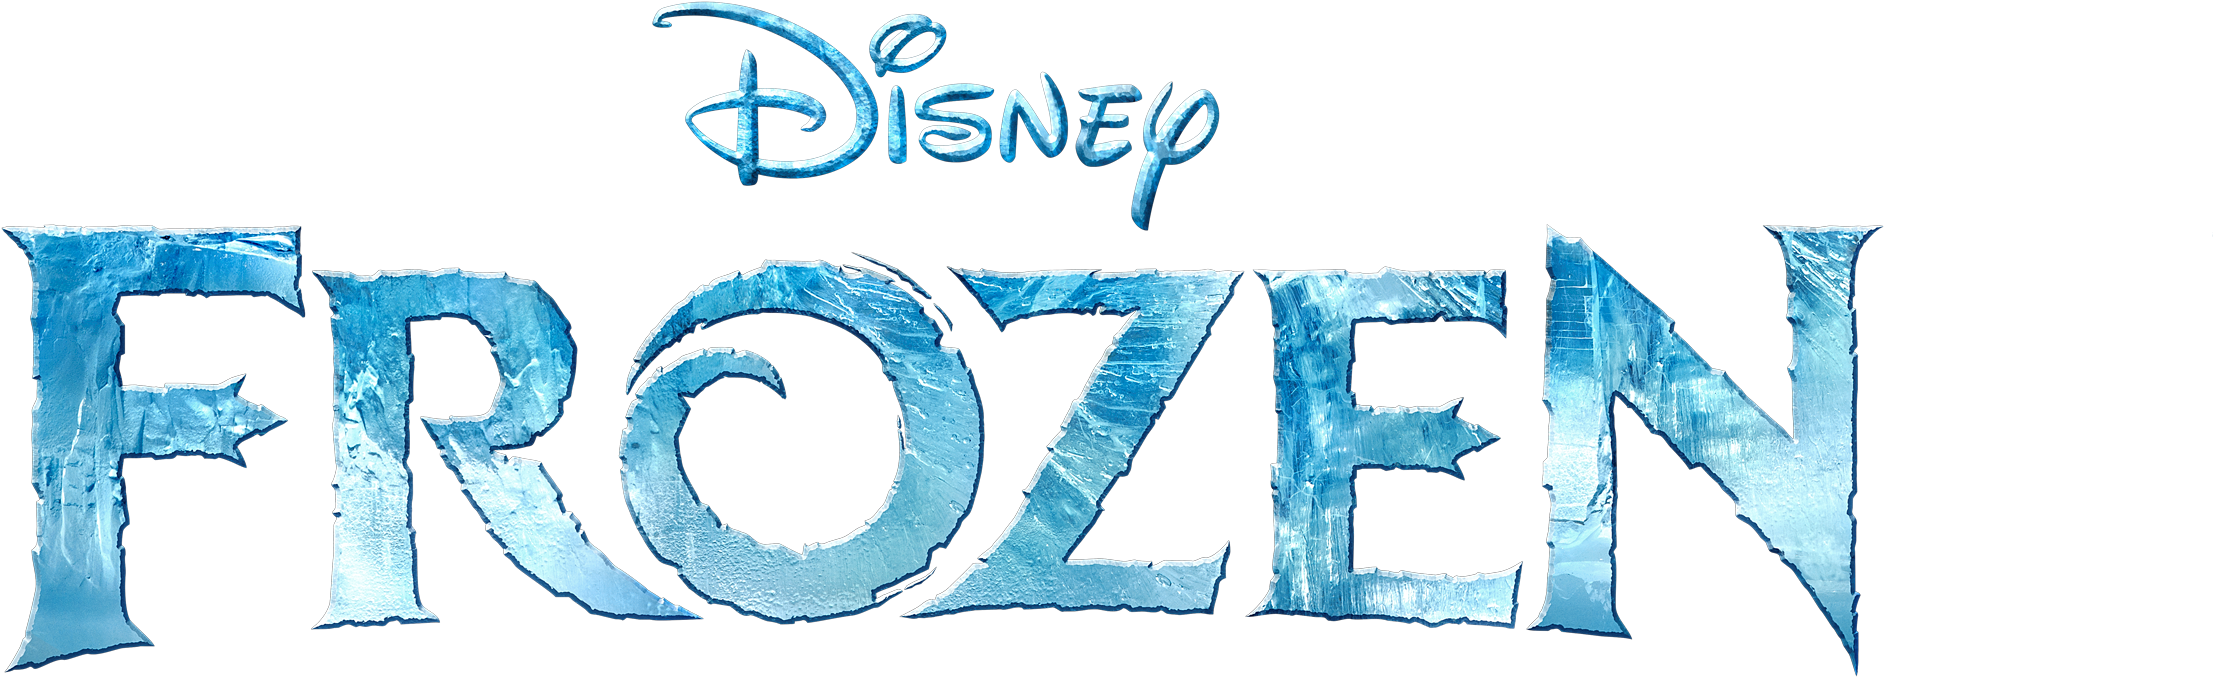 17 176307 Disneys Frozen Releases On Digital Hd February 25th 